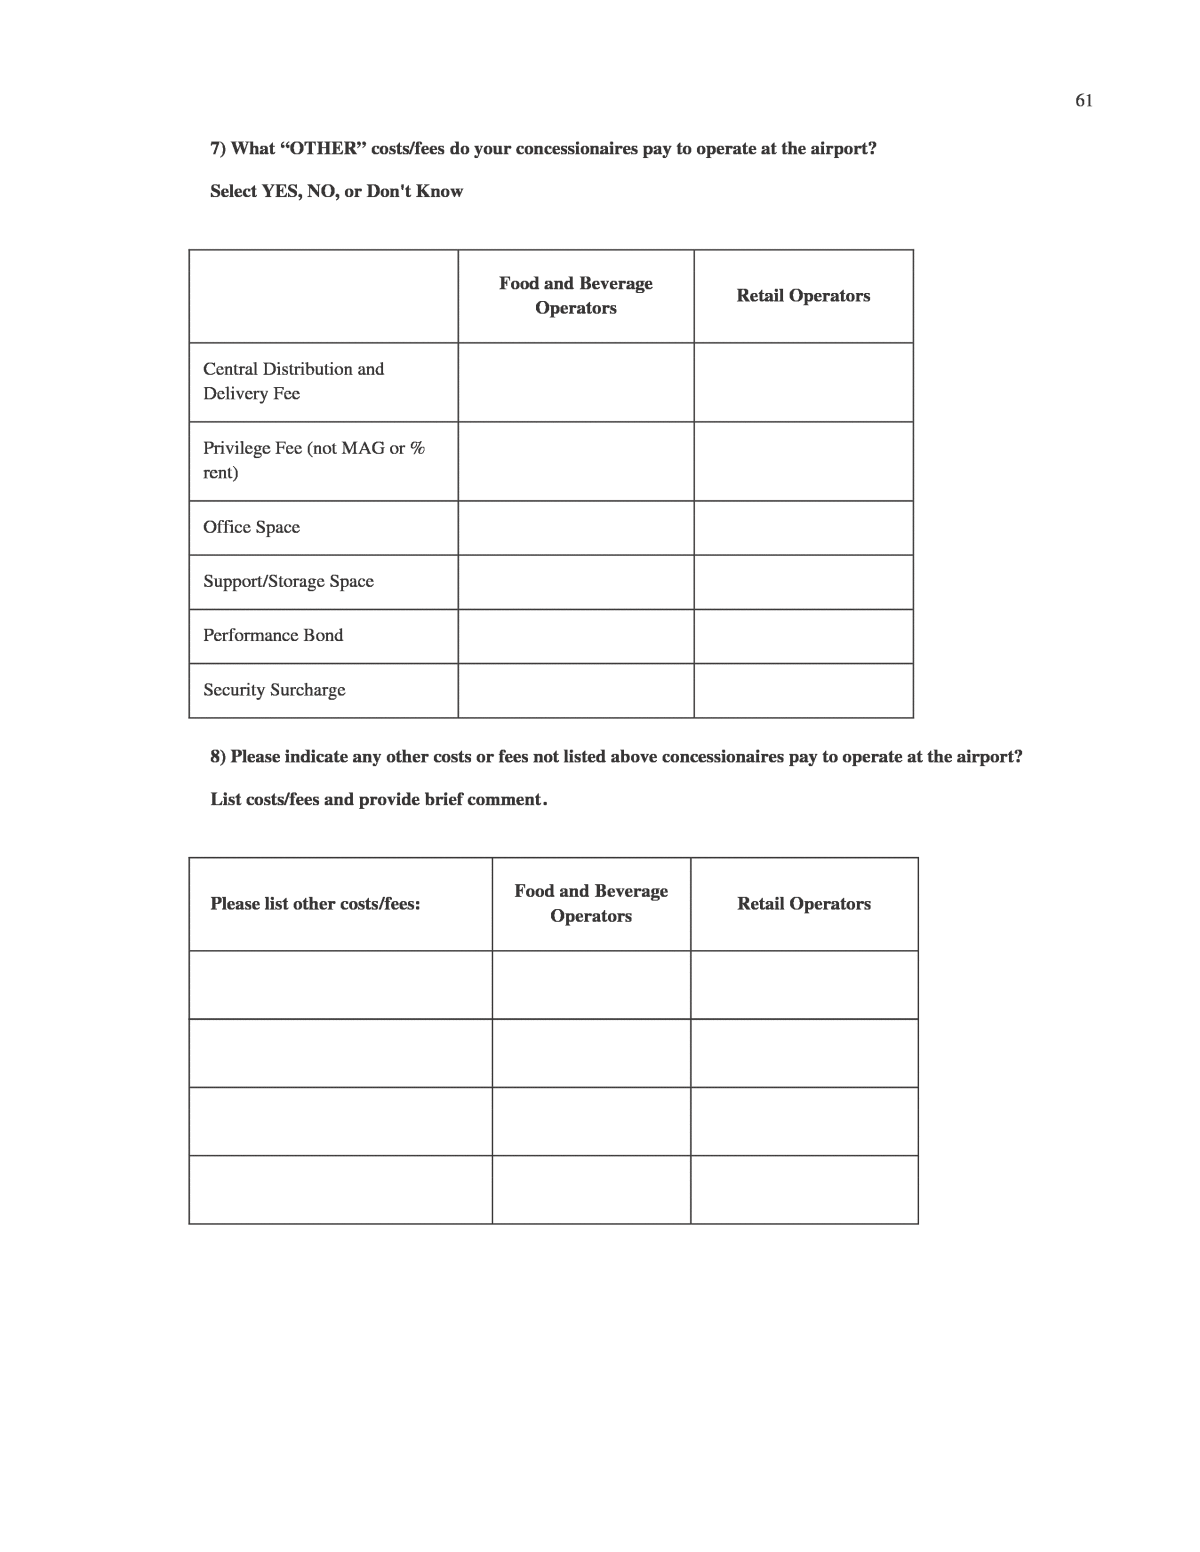 food questionnaire format